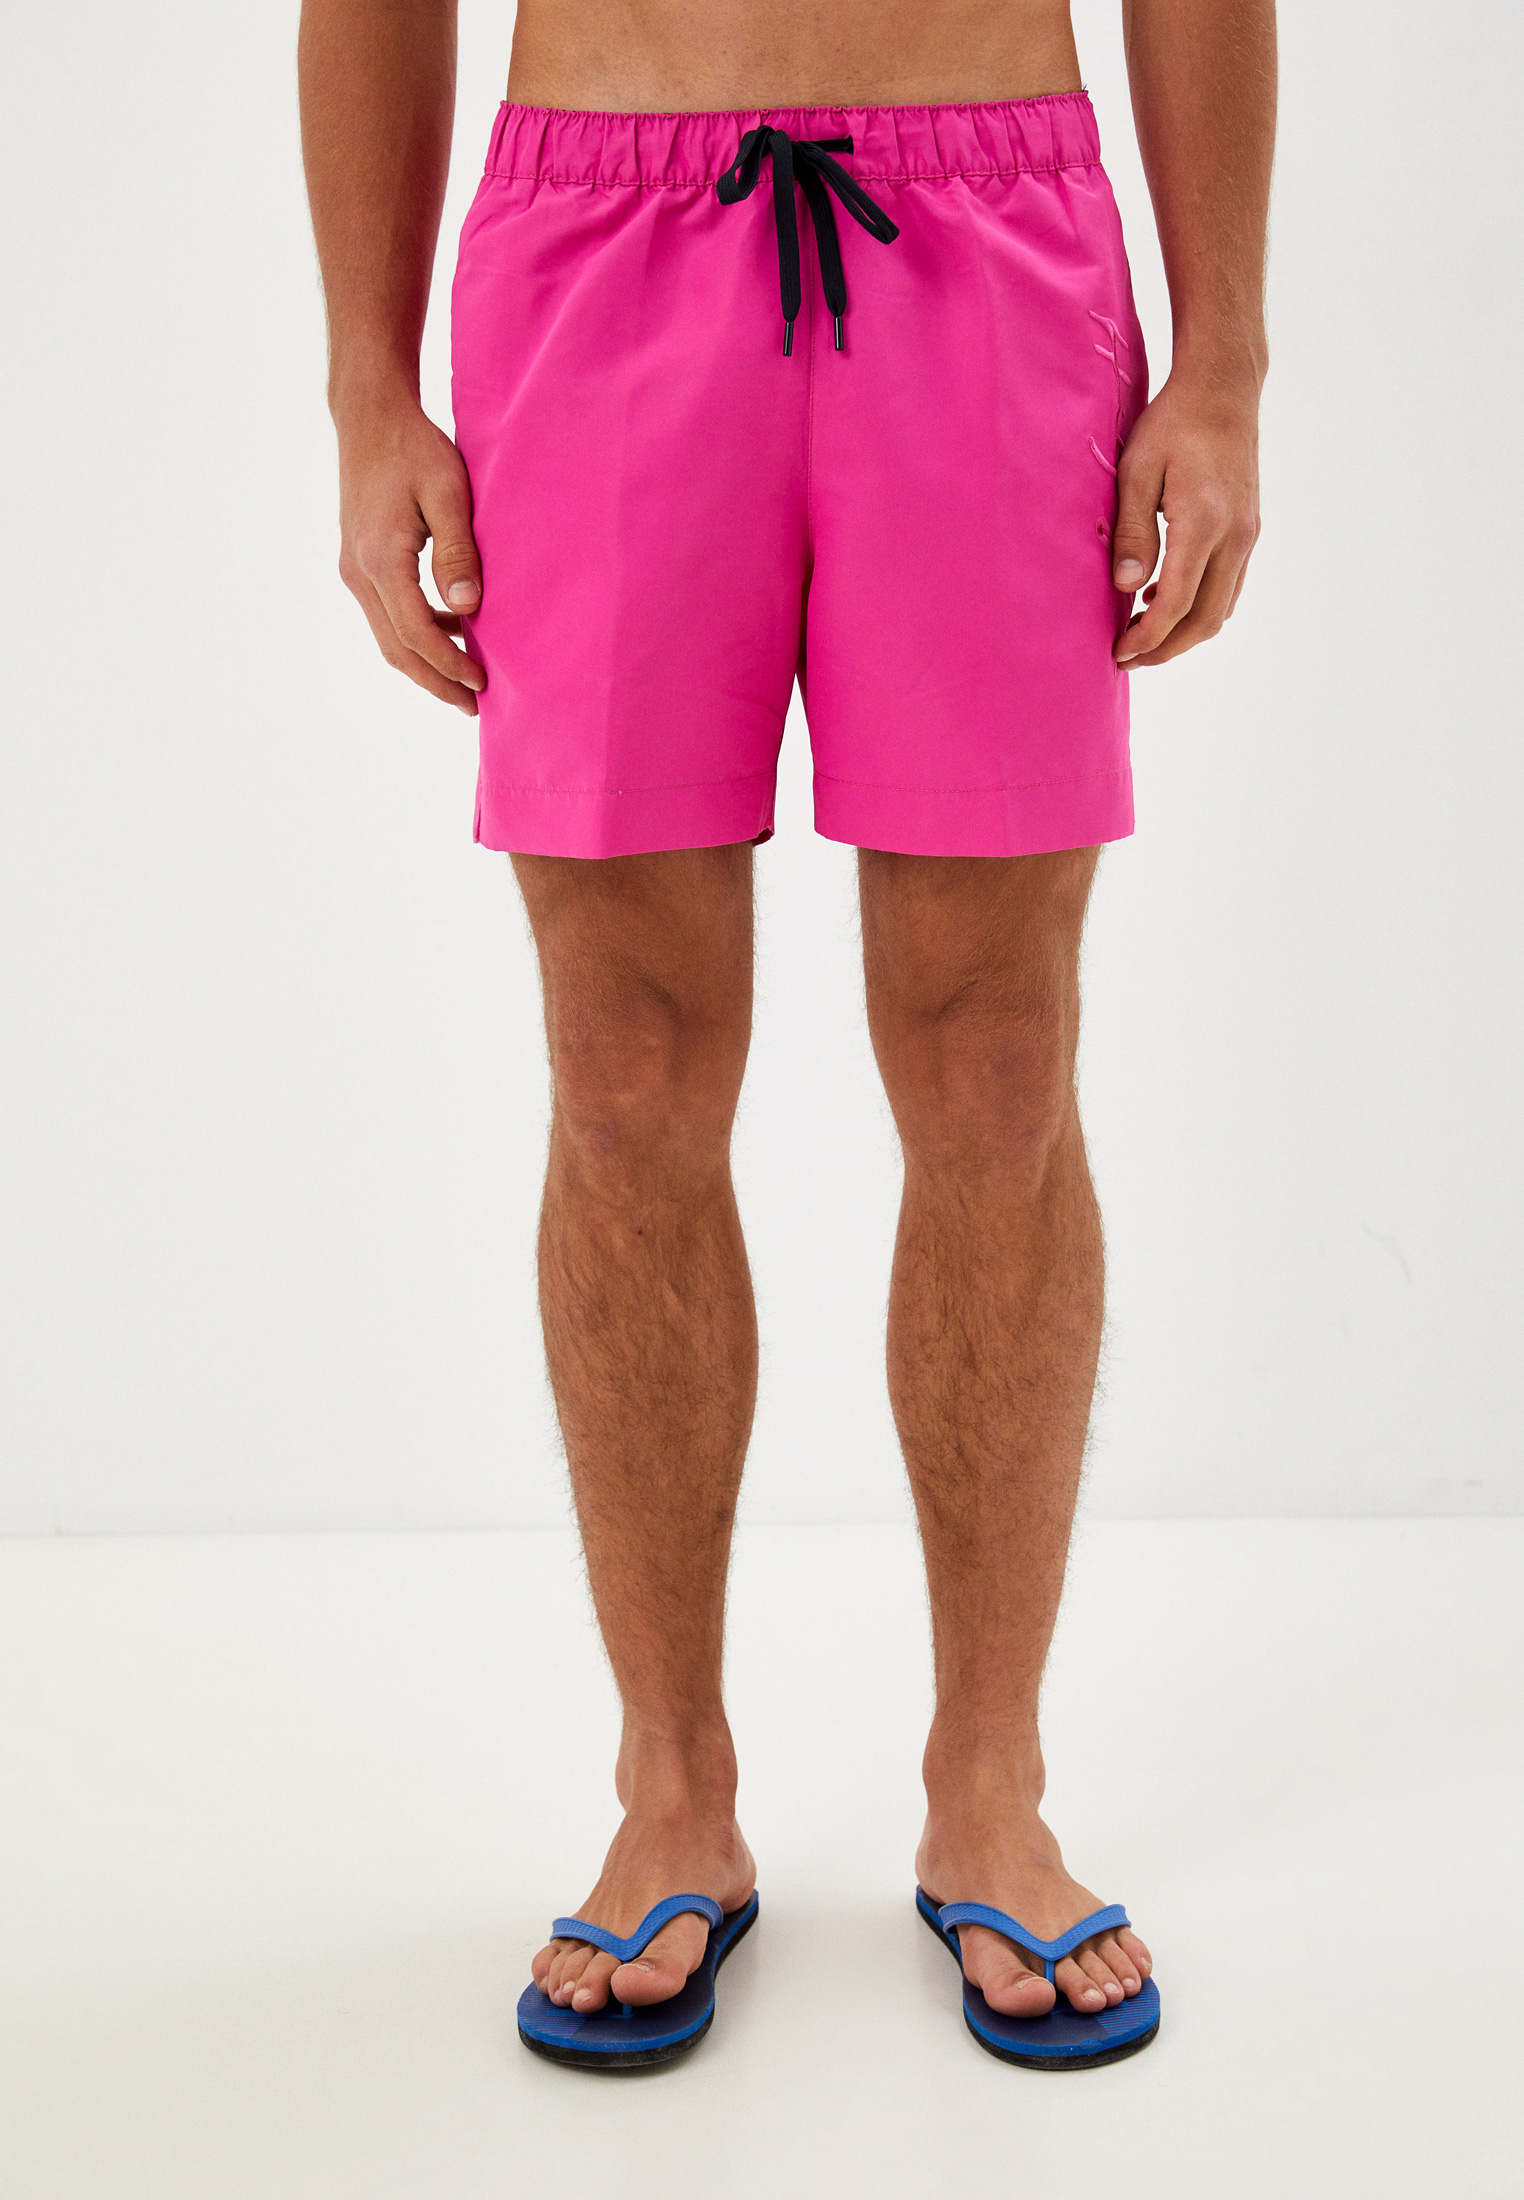 Шорты красноярск. Плавательные шорты Tommy Hilfiger. Tommy Hilfiger шорты для мужчин плавательные. Шорты Tommy Hilfiger мужские розовые. Шорты розовые Tommy Hilfiger.